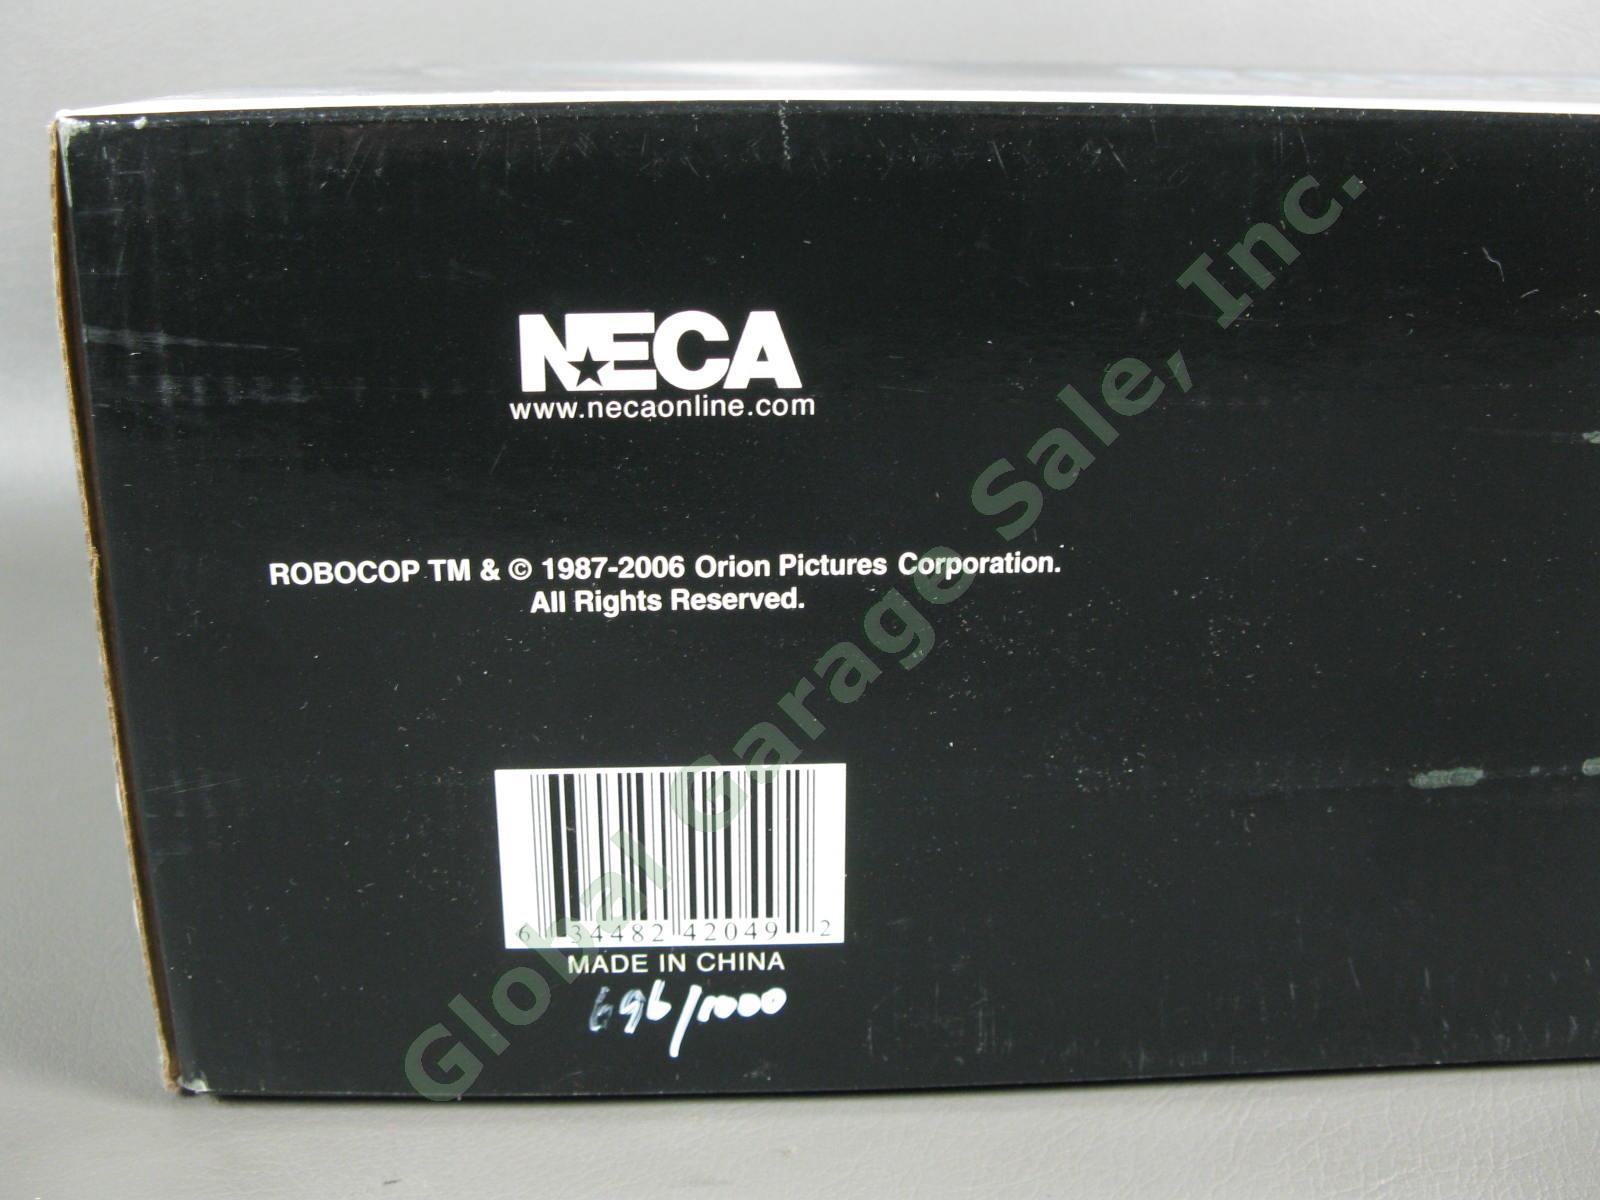 Neca ROBOCOP Beretta M93R Auto-9 Resin Gun Replica Prop Limited Edition 696/1000 3